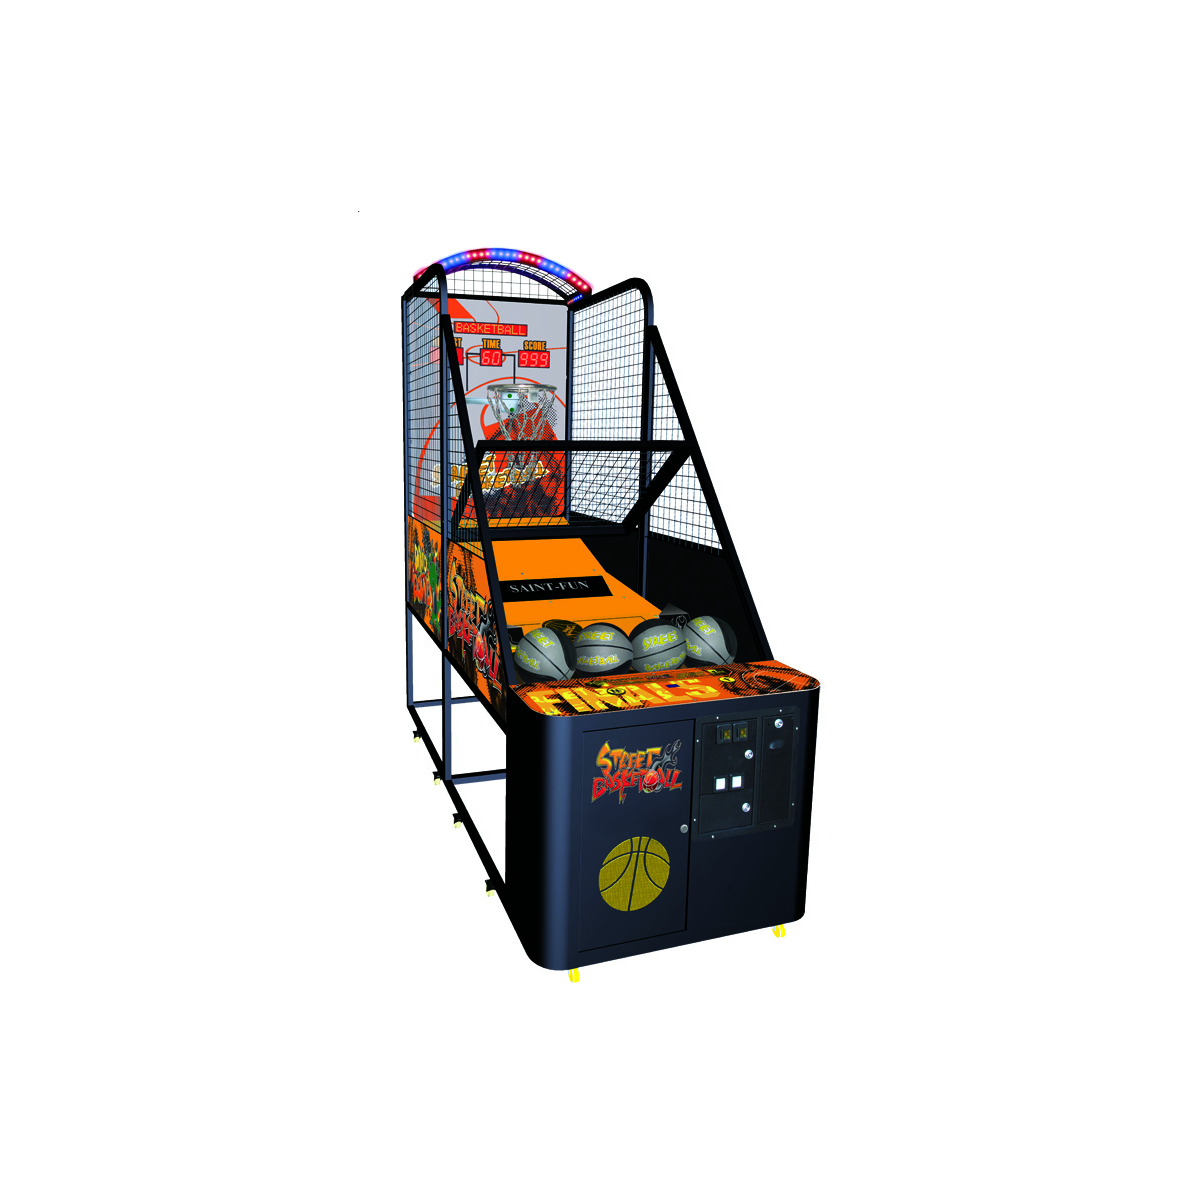 Machine de jeu de basket-ball à pièces d'arcade, machine de jeu de